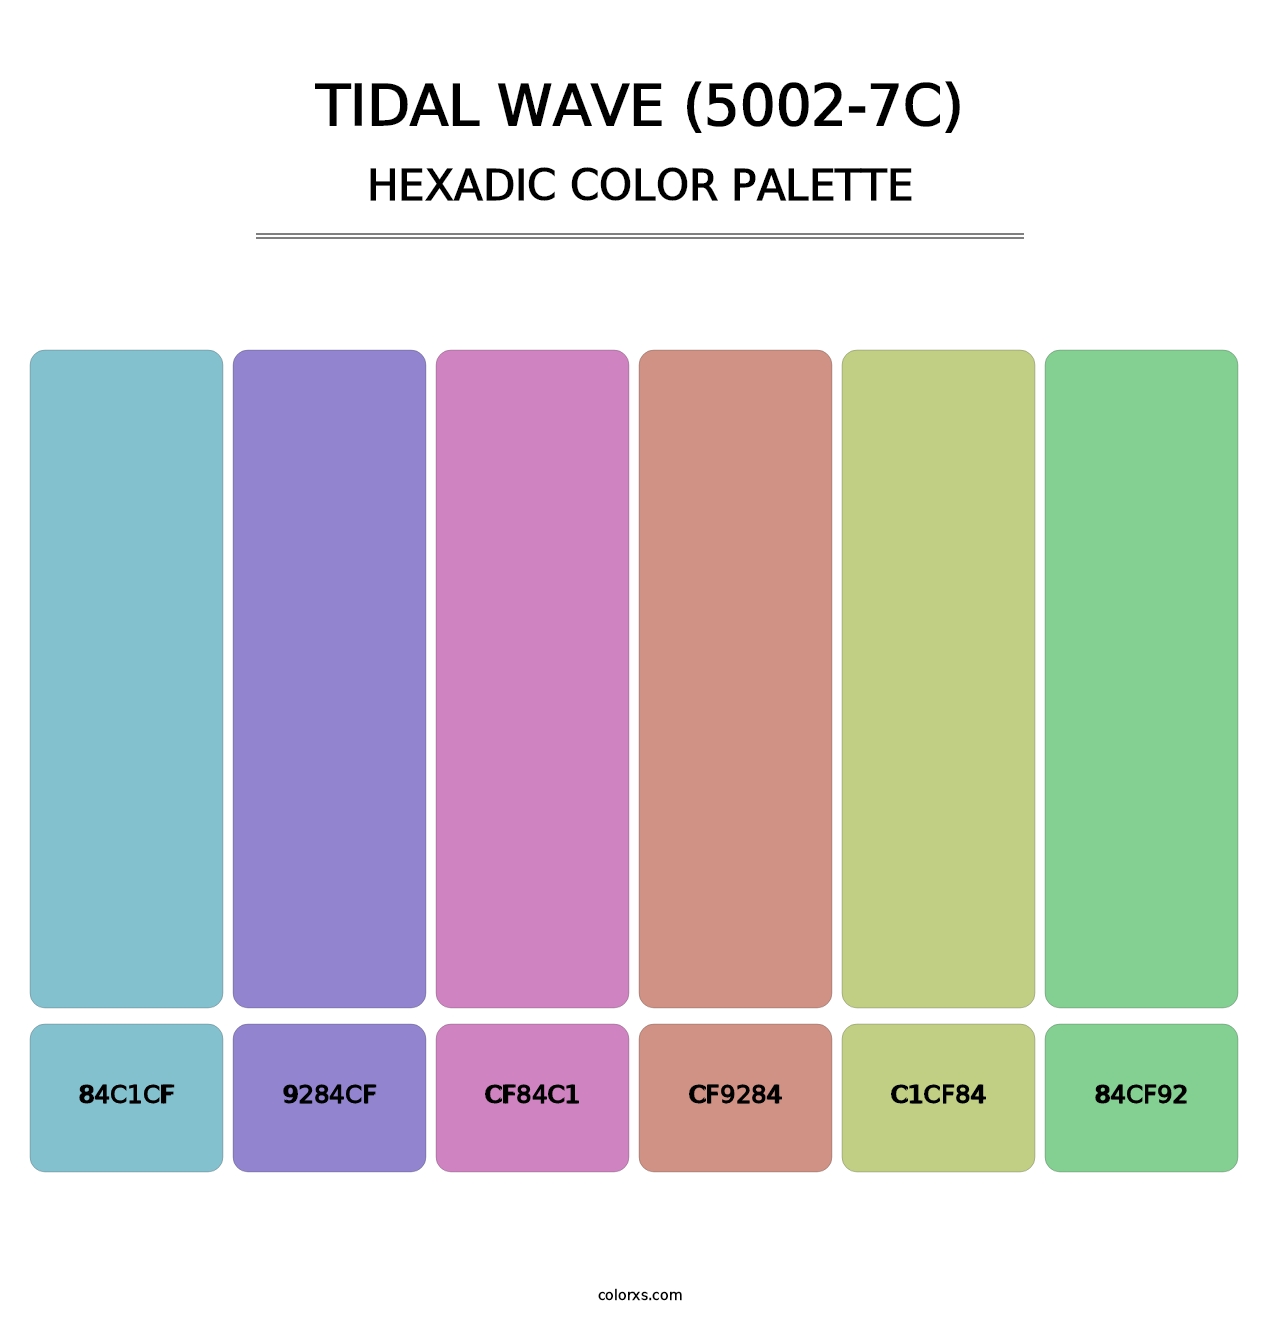 Tidal Wave (5002-7C) - Hexadic Color Palette